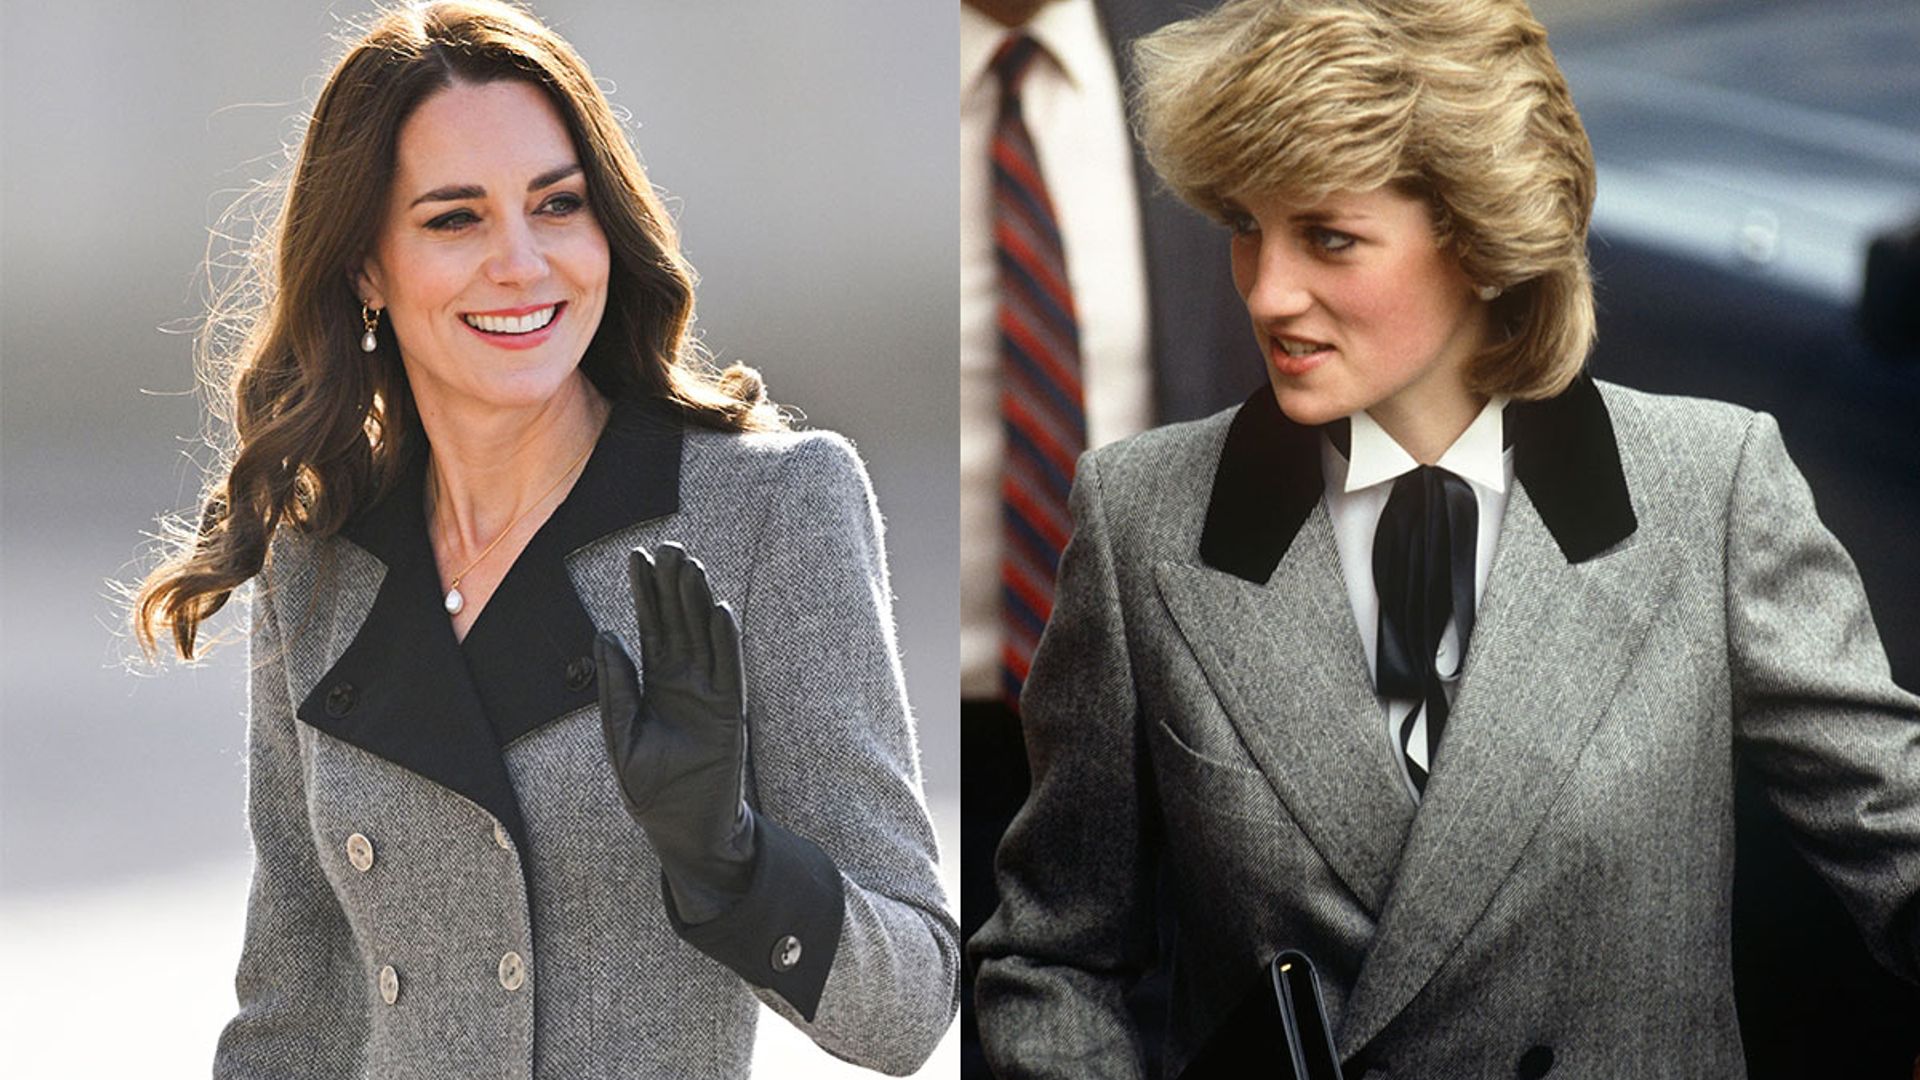 9 best coat dresses inspired by Princess Kate: From Karen Millen to Hobbs